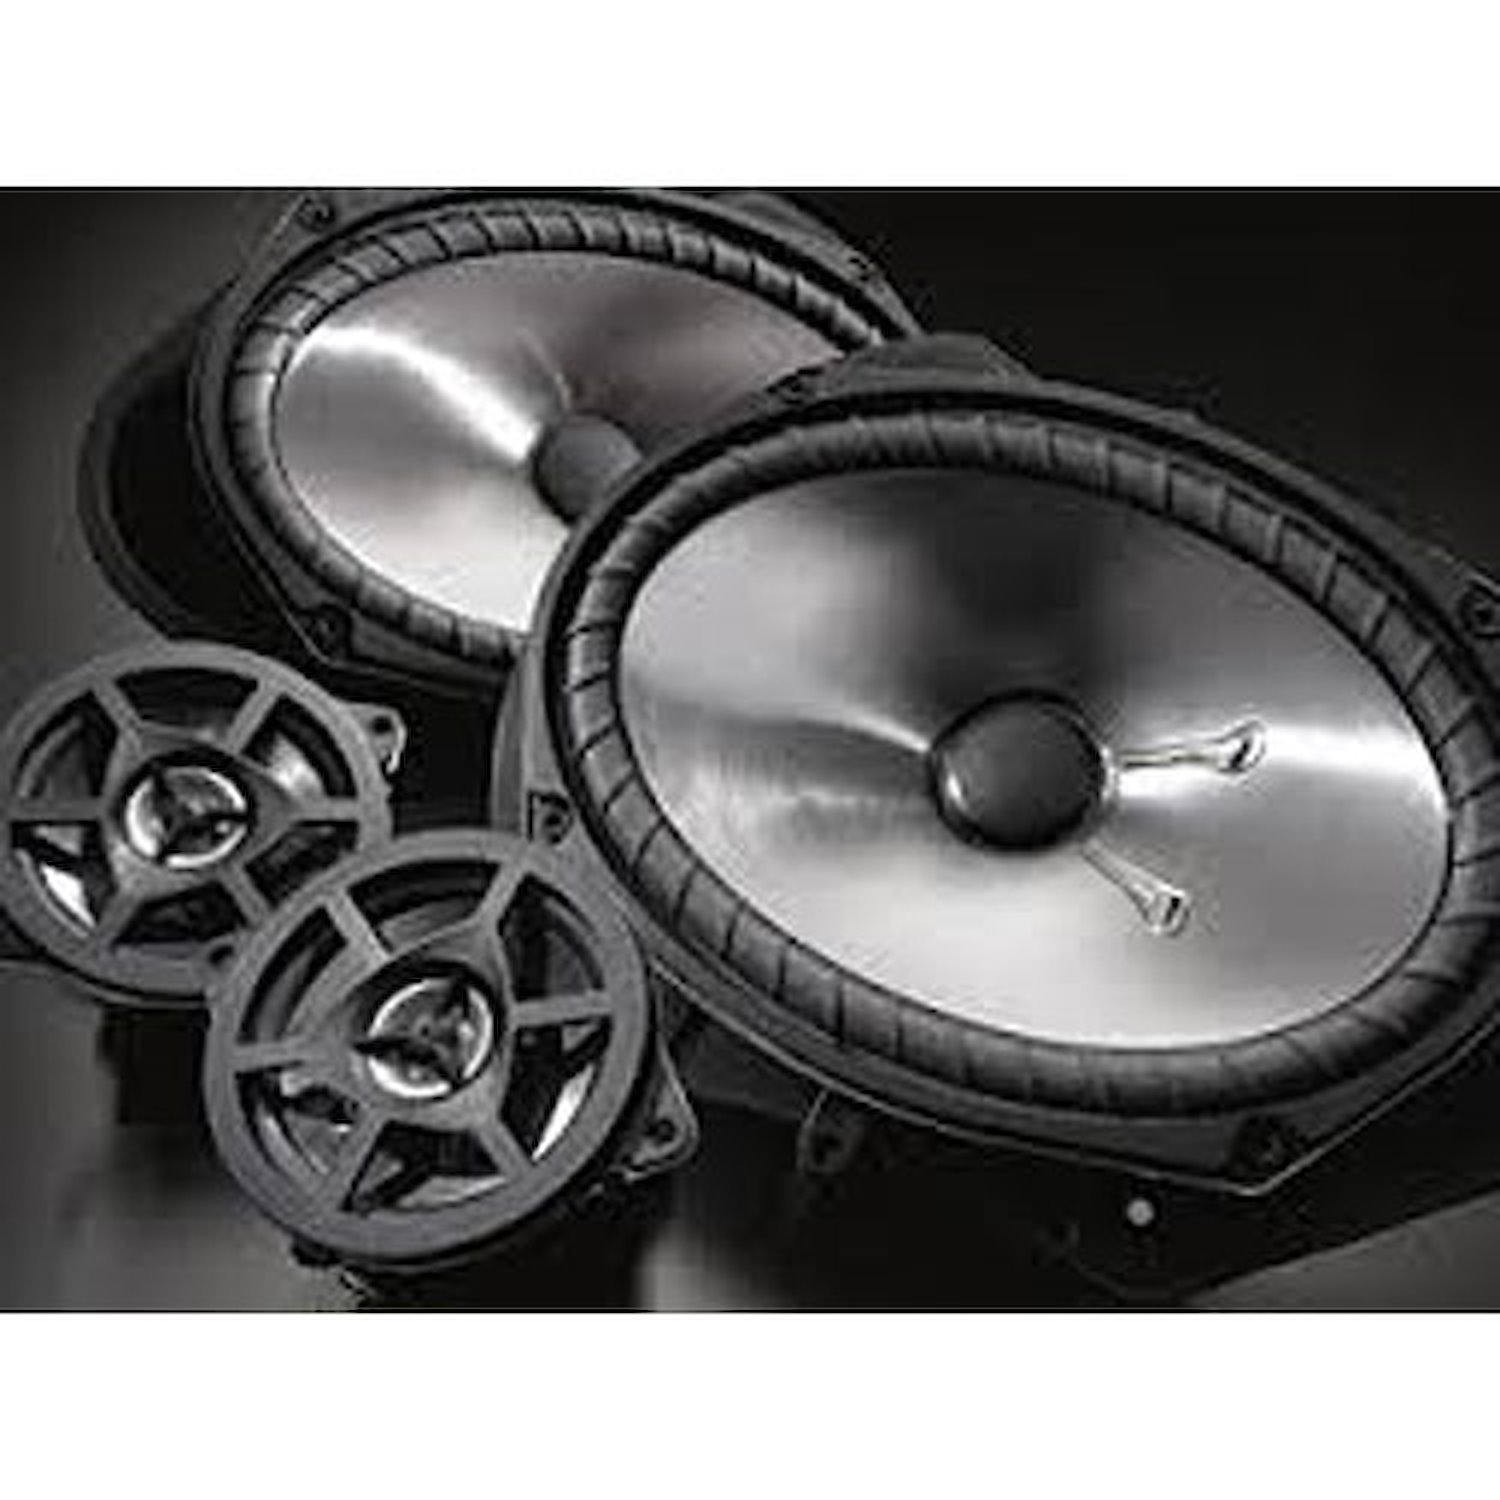 Audio Speaker Premium Upgrade 2005-13 Chrysler/Dodge/Jeep Includes: